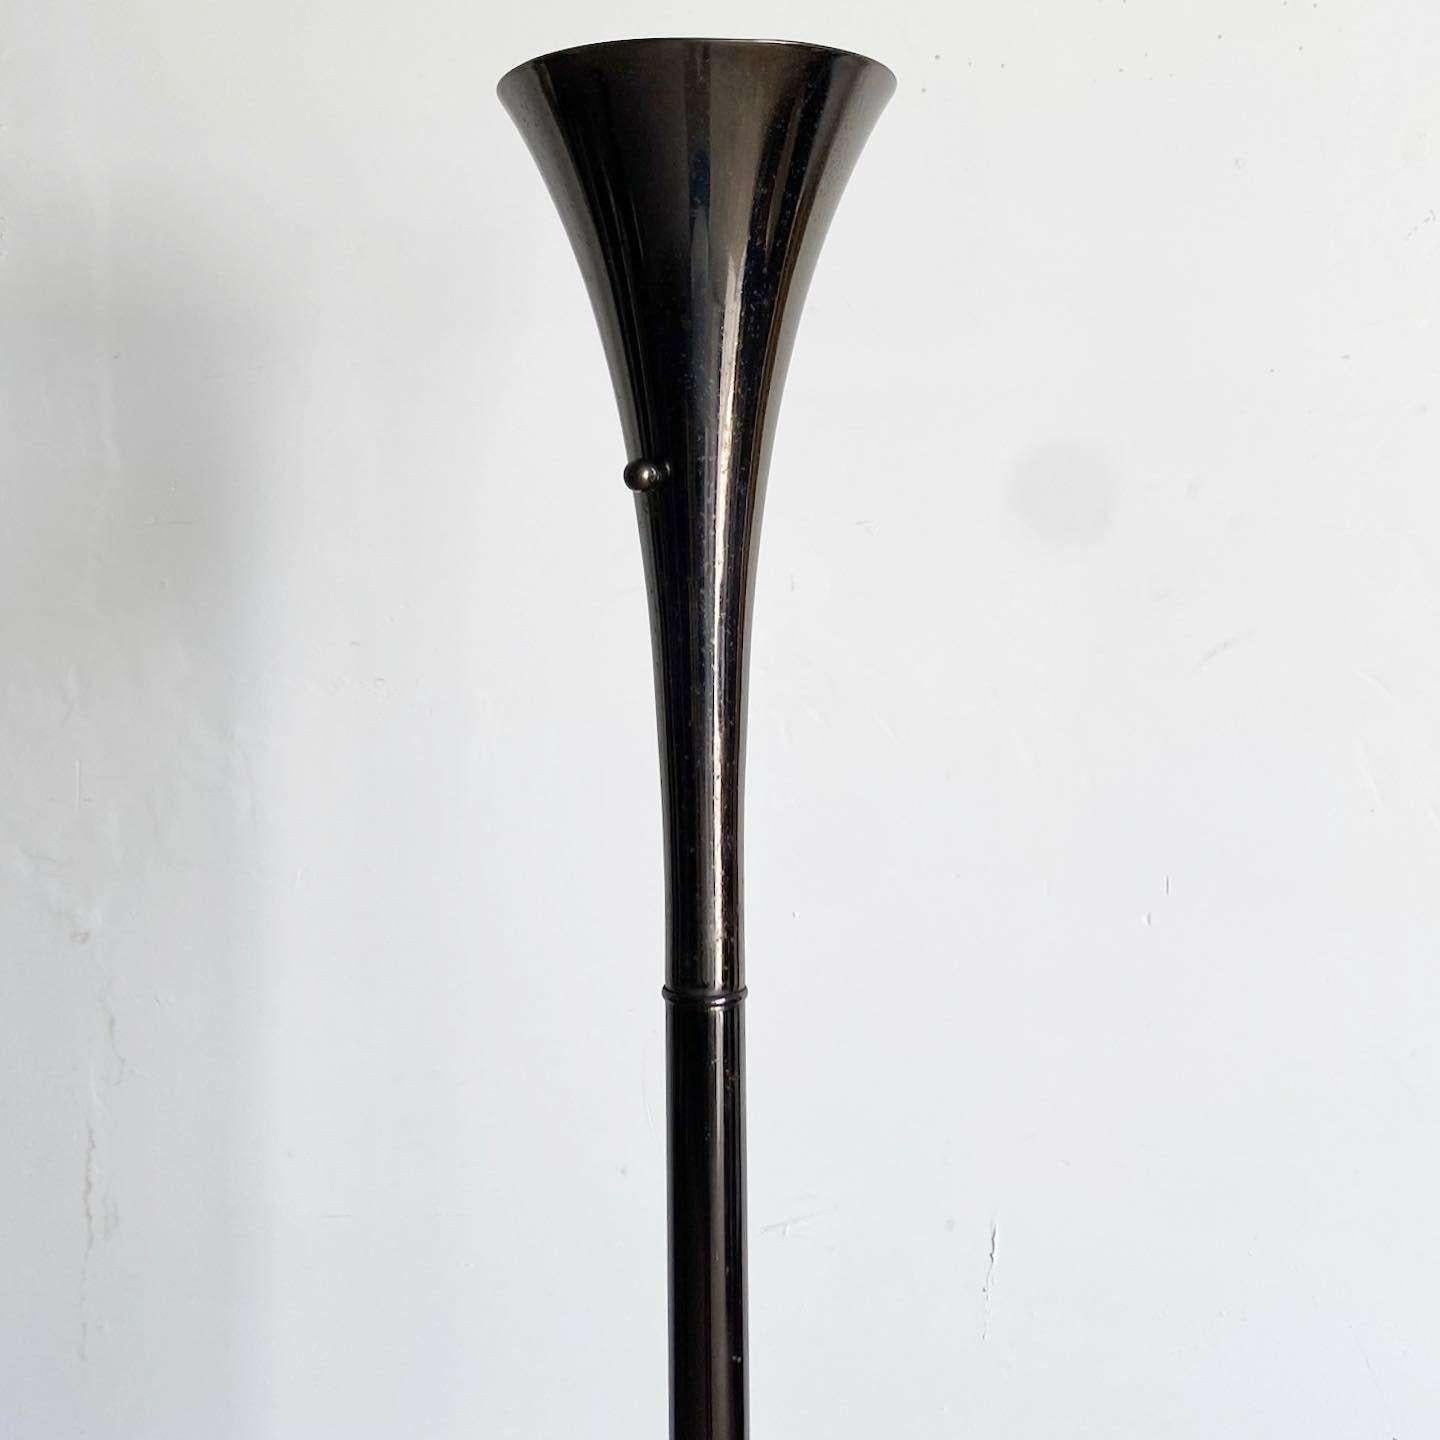 Excellent vintage mid century modern charcoal metal floor lamp.